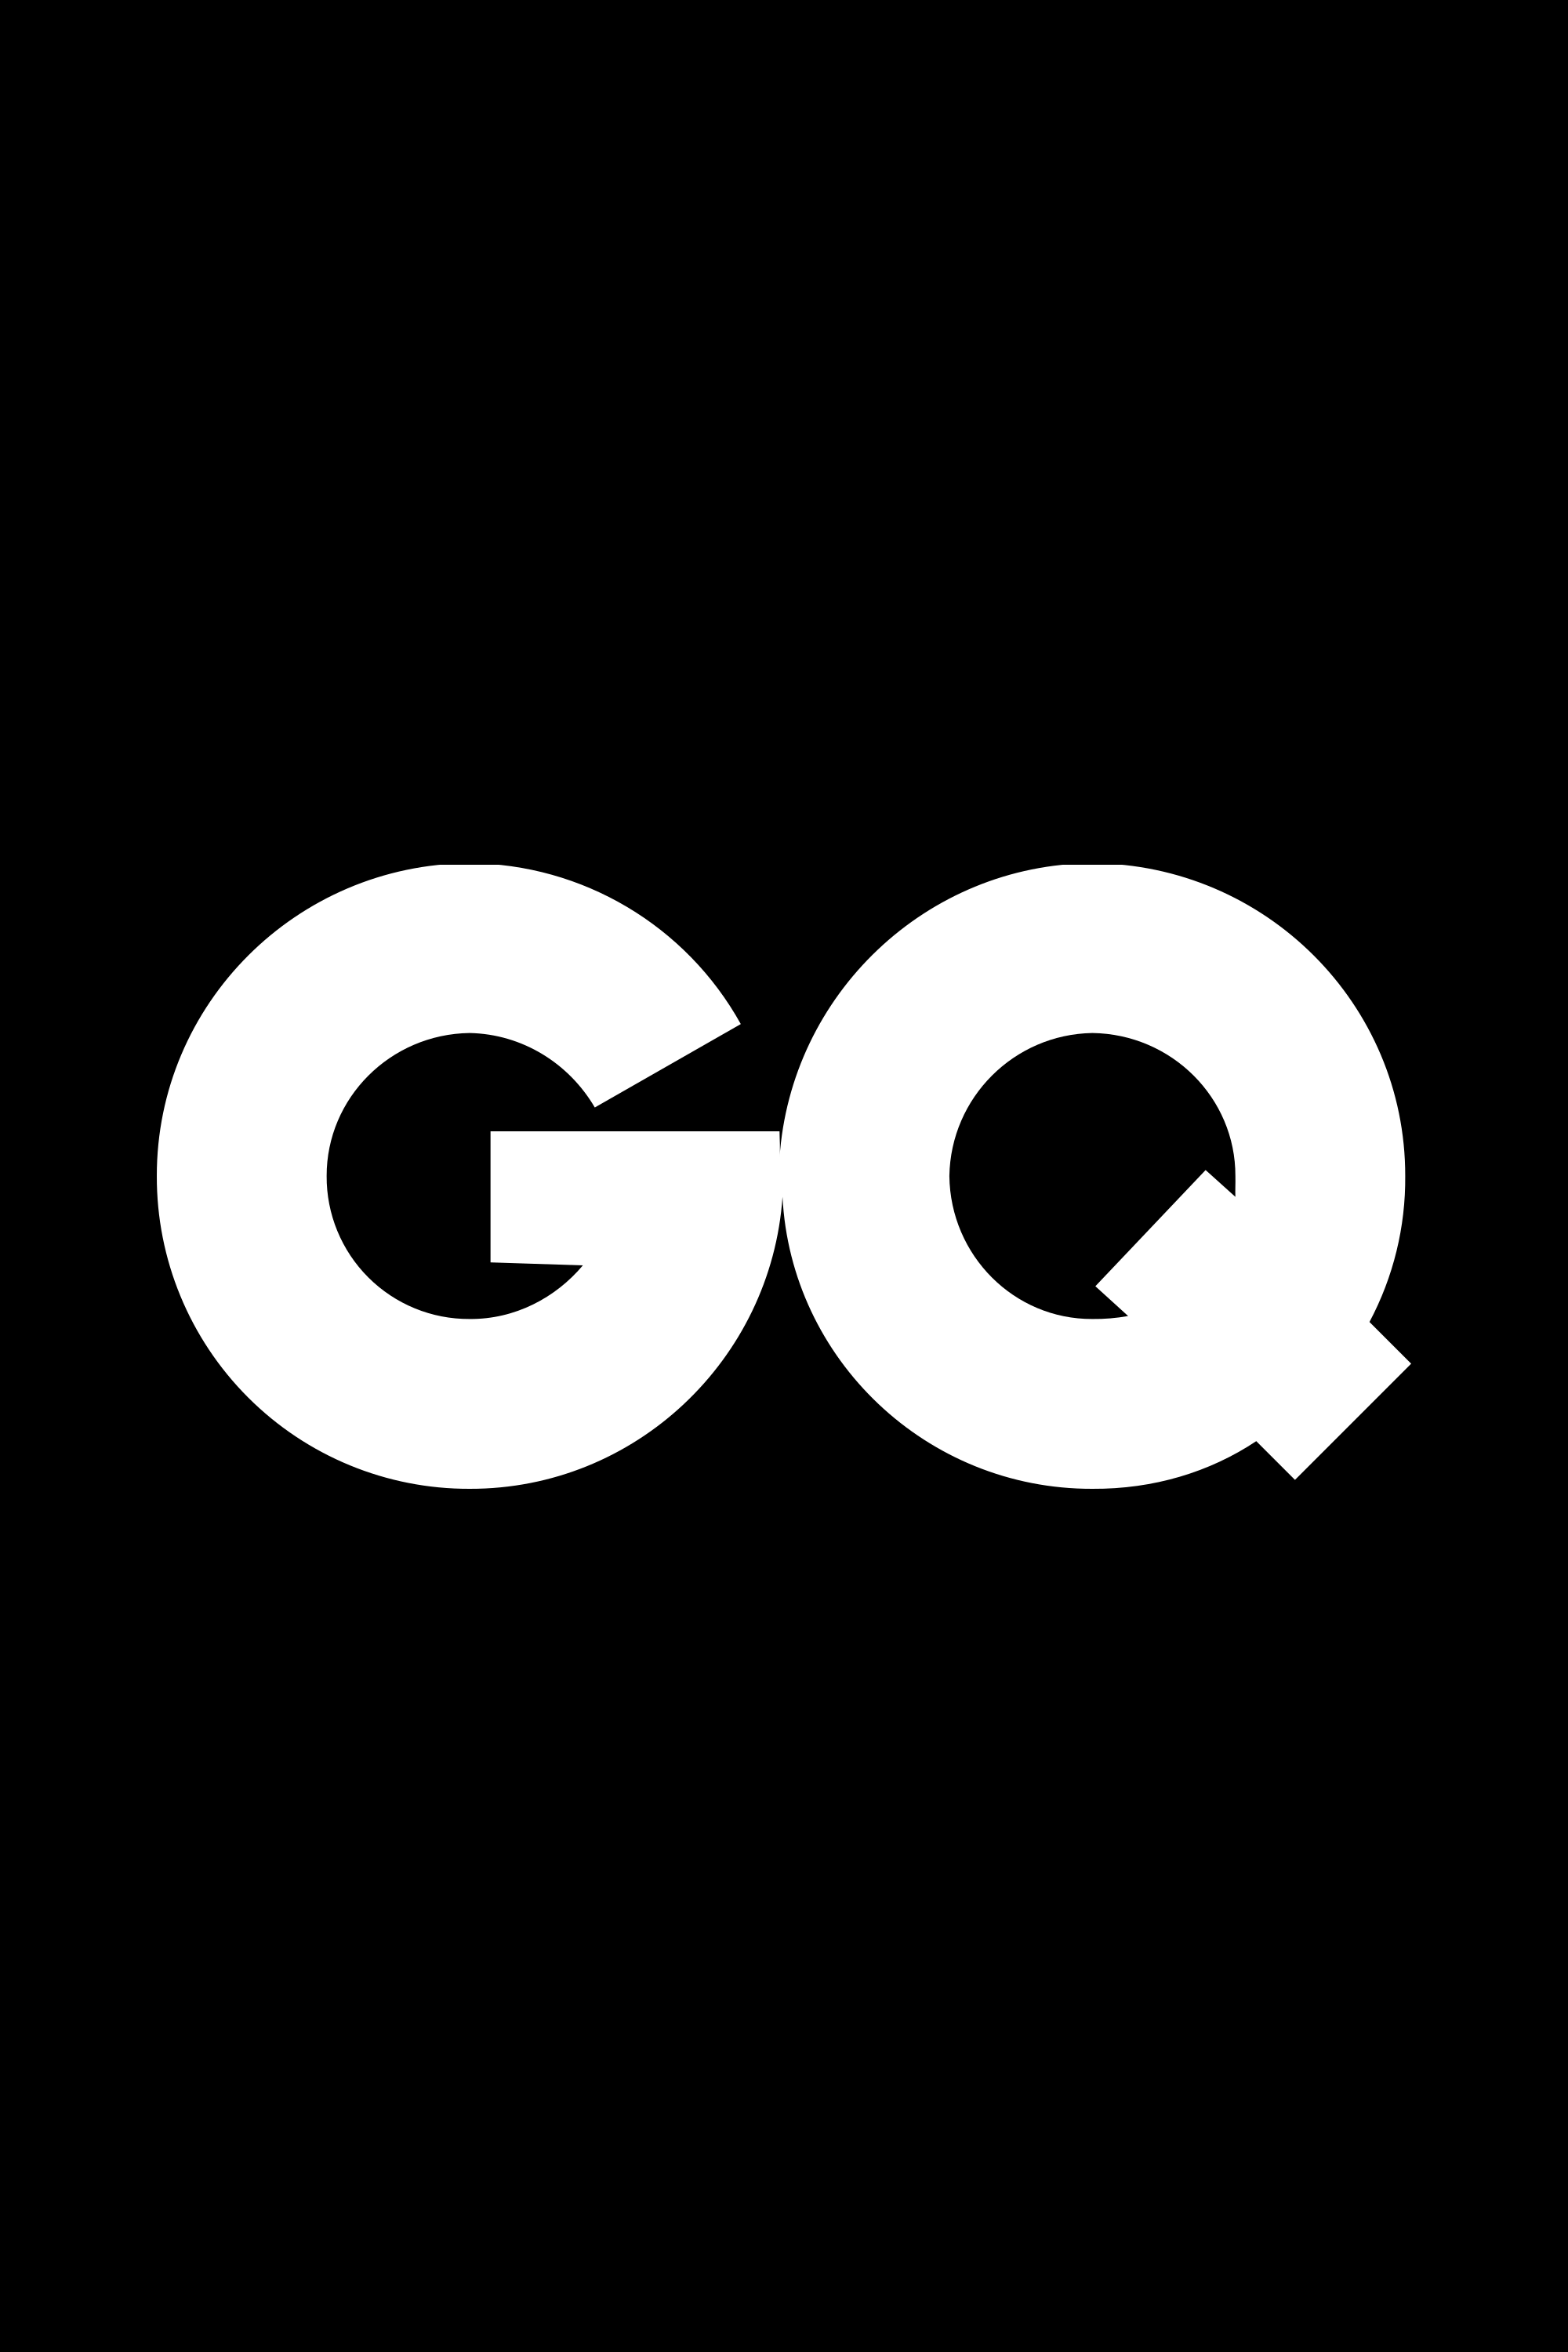 gq logo - Google Search | Flight club, Gq, ? logo